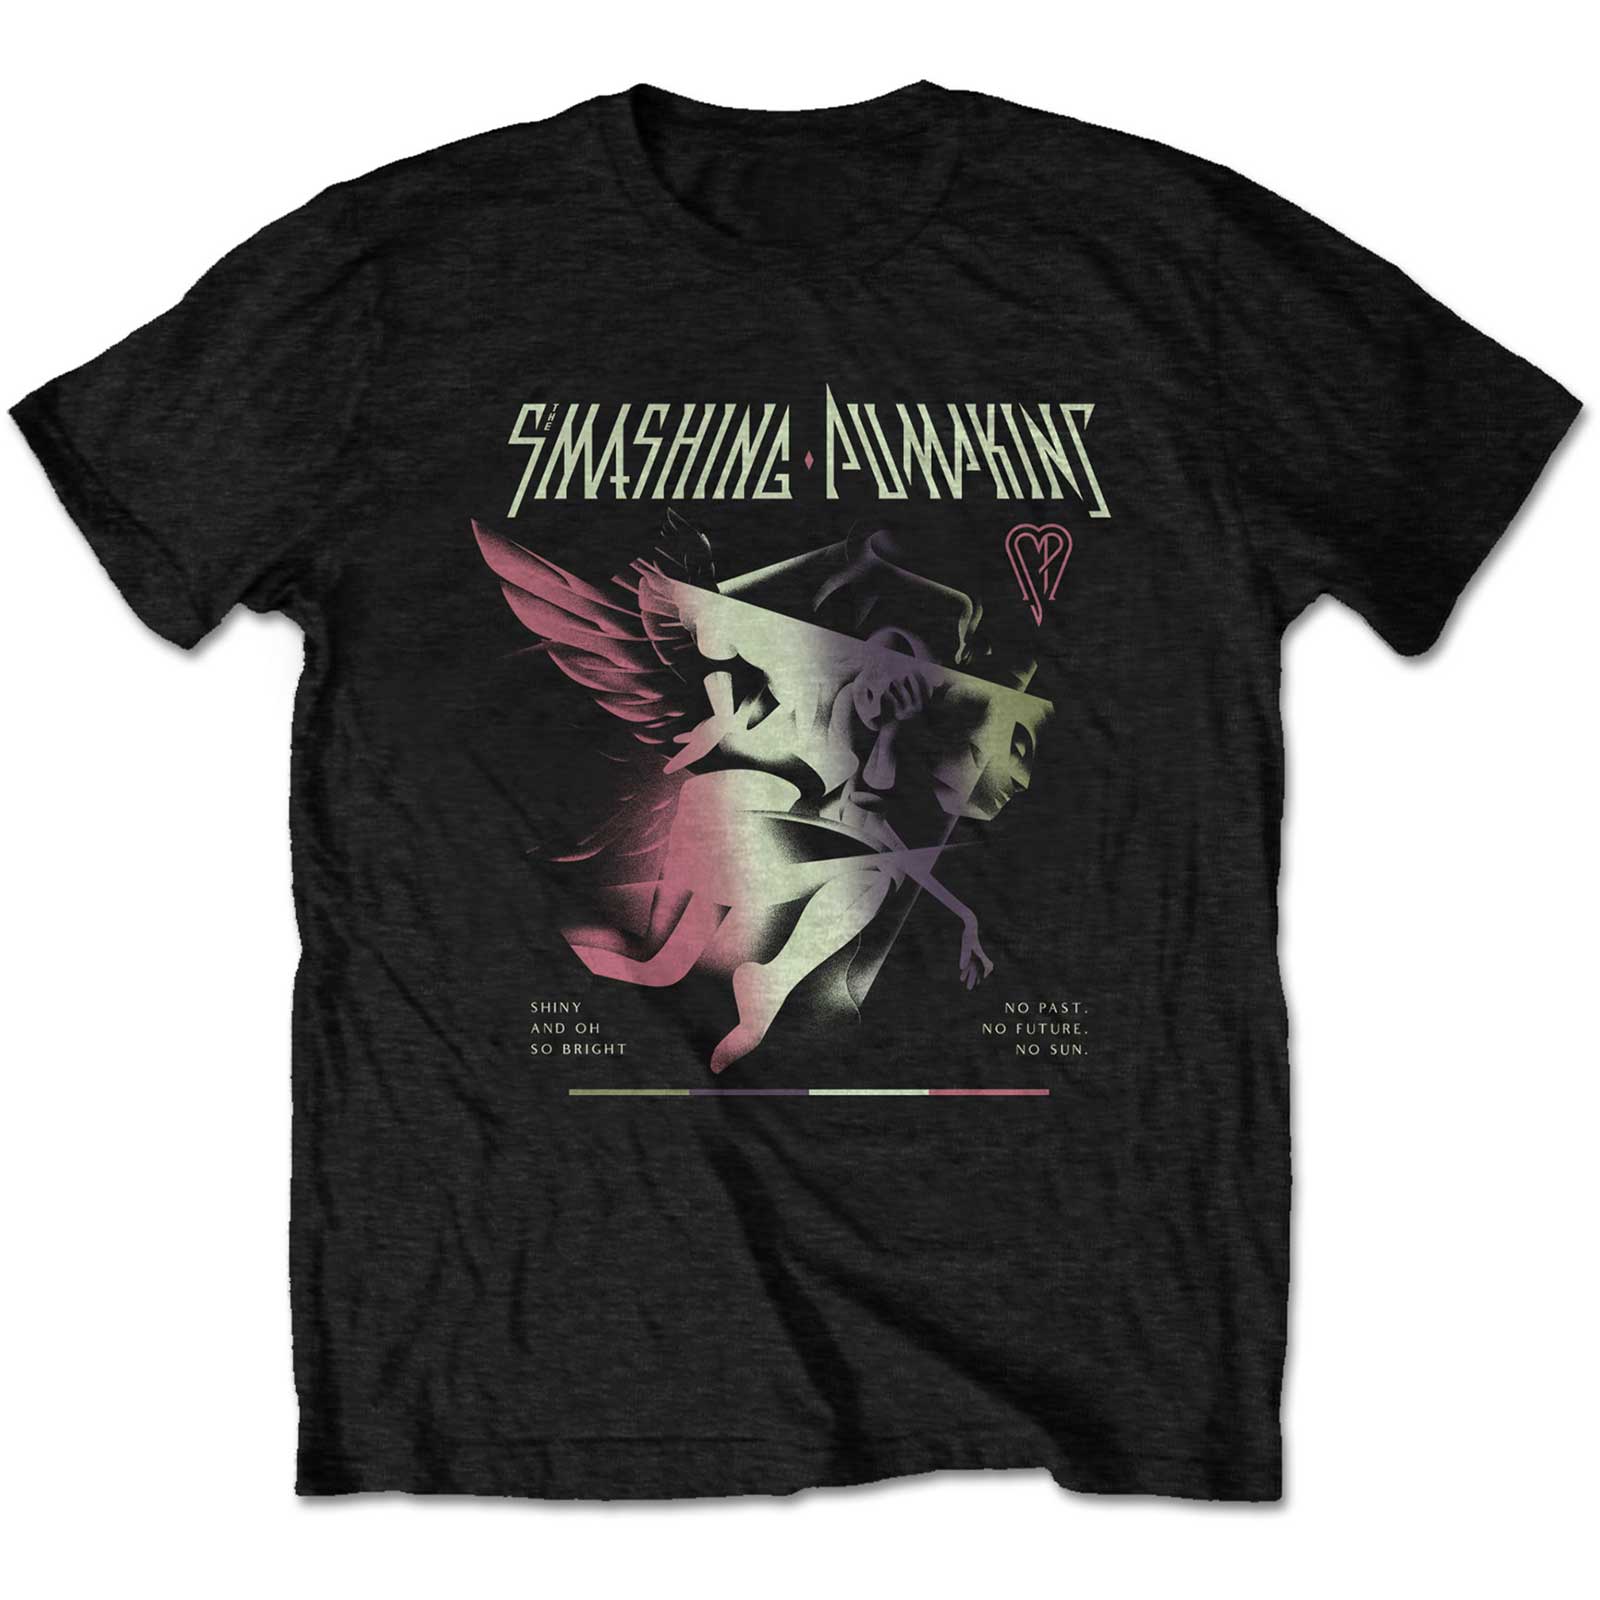 The Smashing Pumpkins T-Shirt - Shiny And Oh So Bright (Unisex)